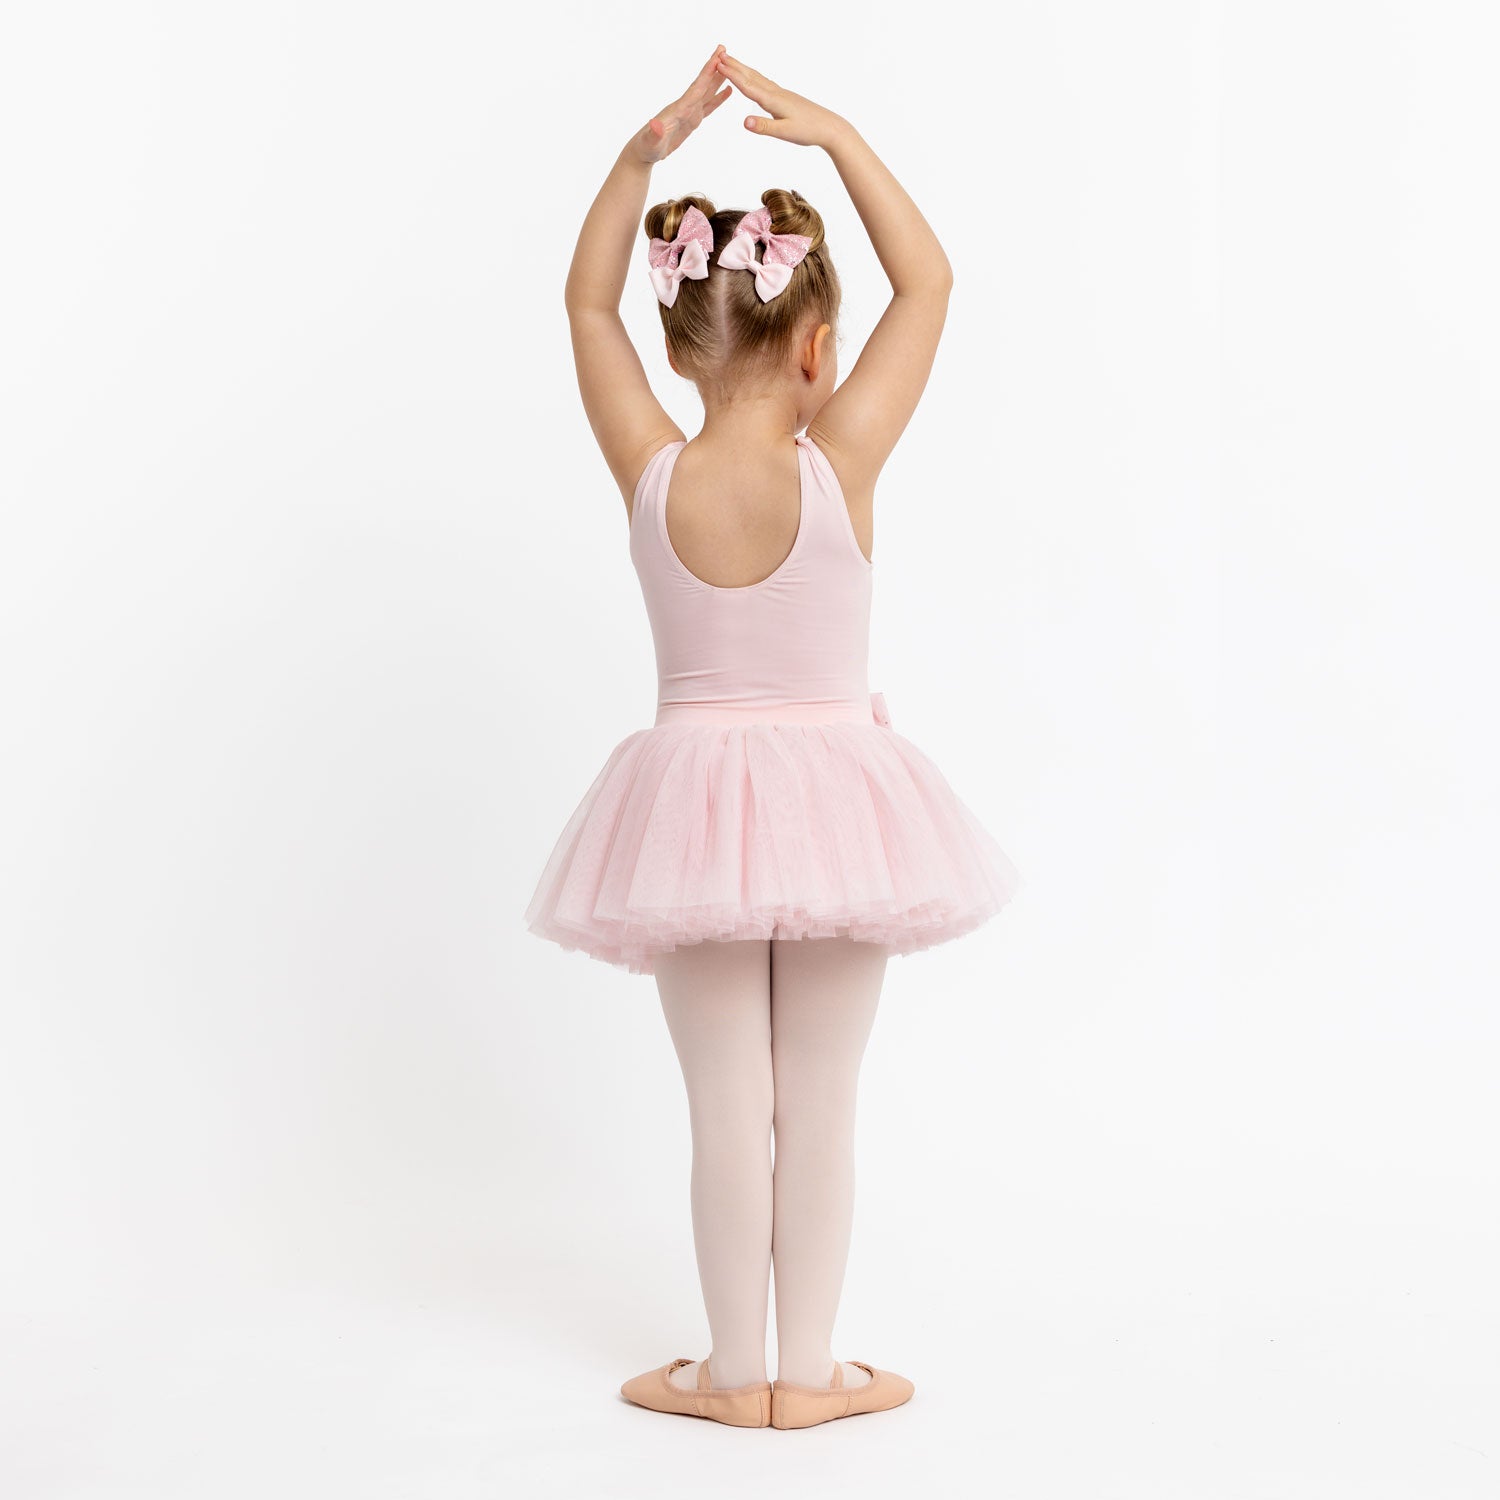 Flo Dancewear Girls Statement Bow Tutu Dress in Pink 